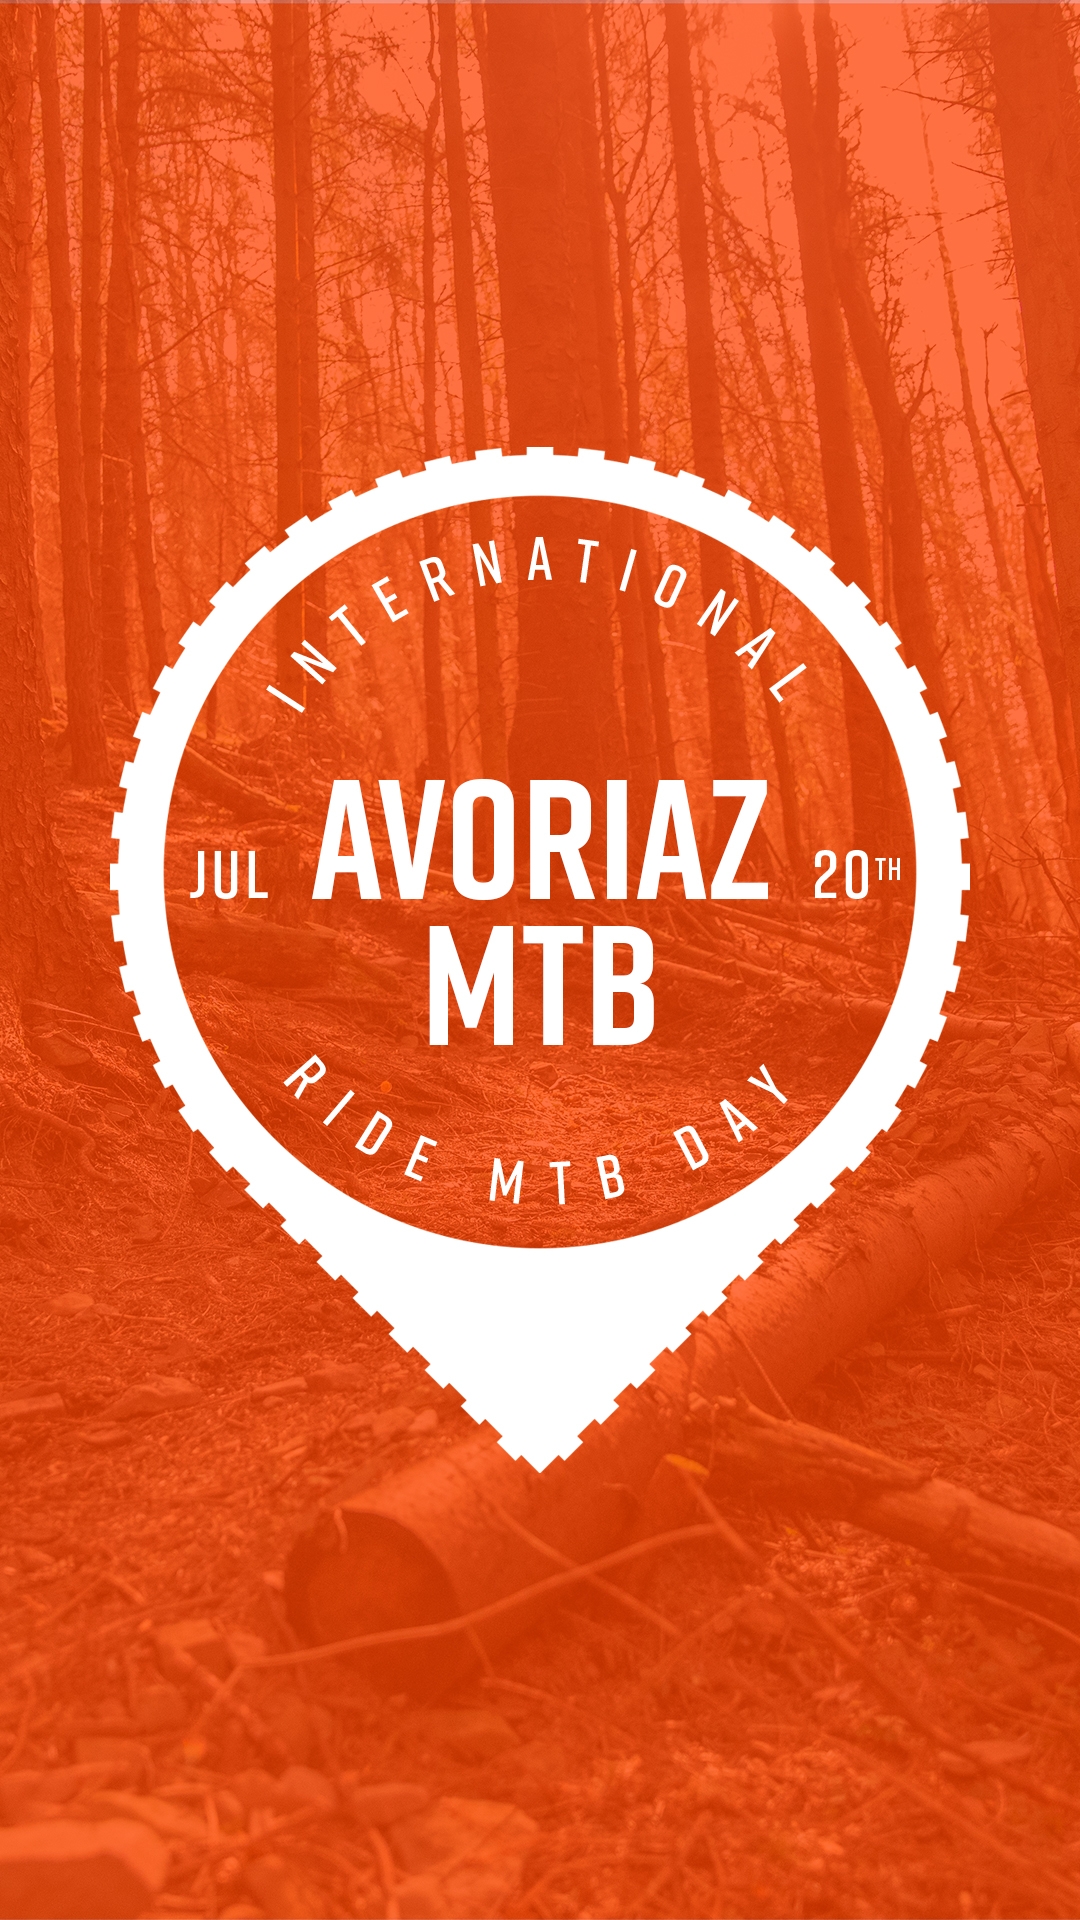 International Ride MTB day